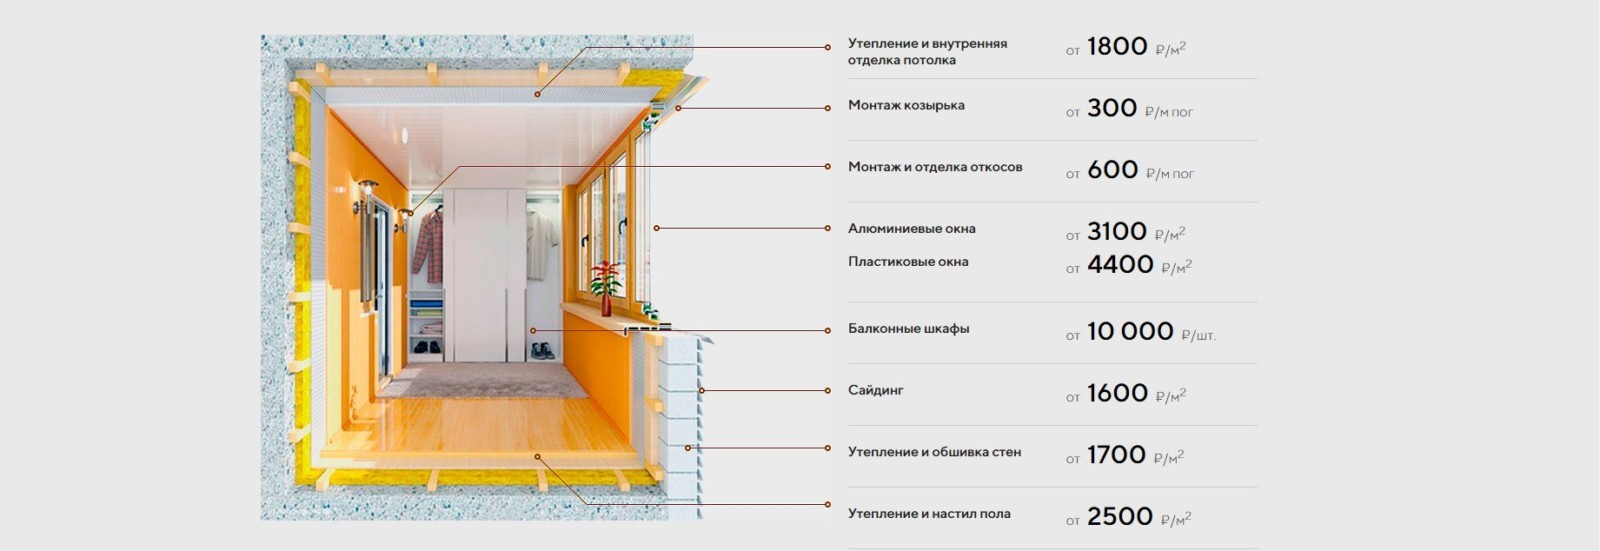 Калькулятор утеплителя на лоджию и балкон - дизайн и ремонт от filippovdoor.ru